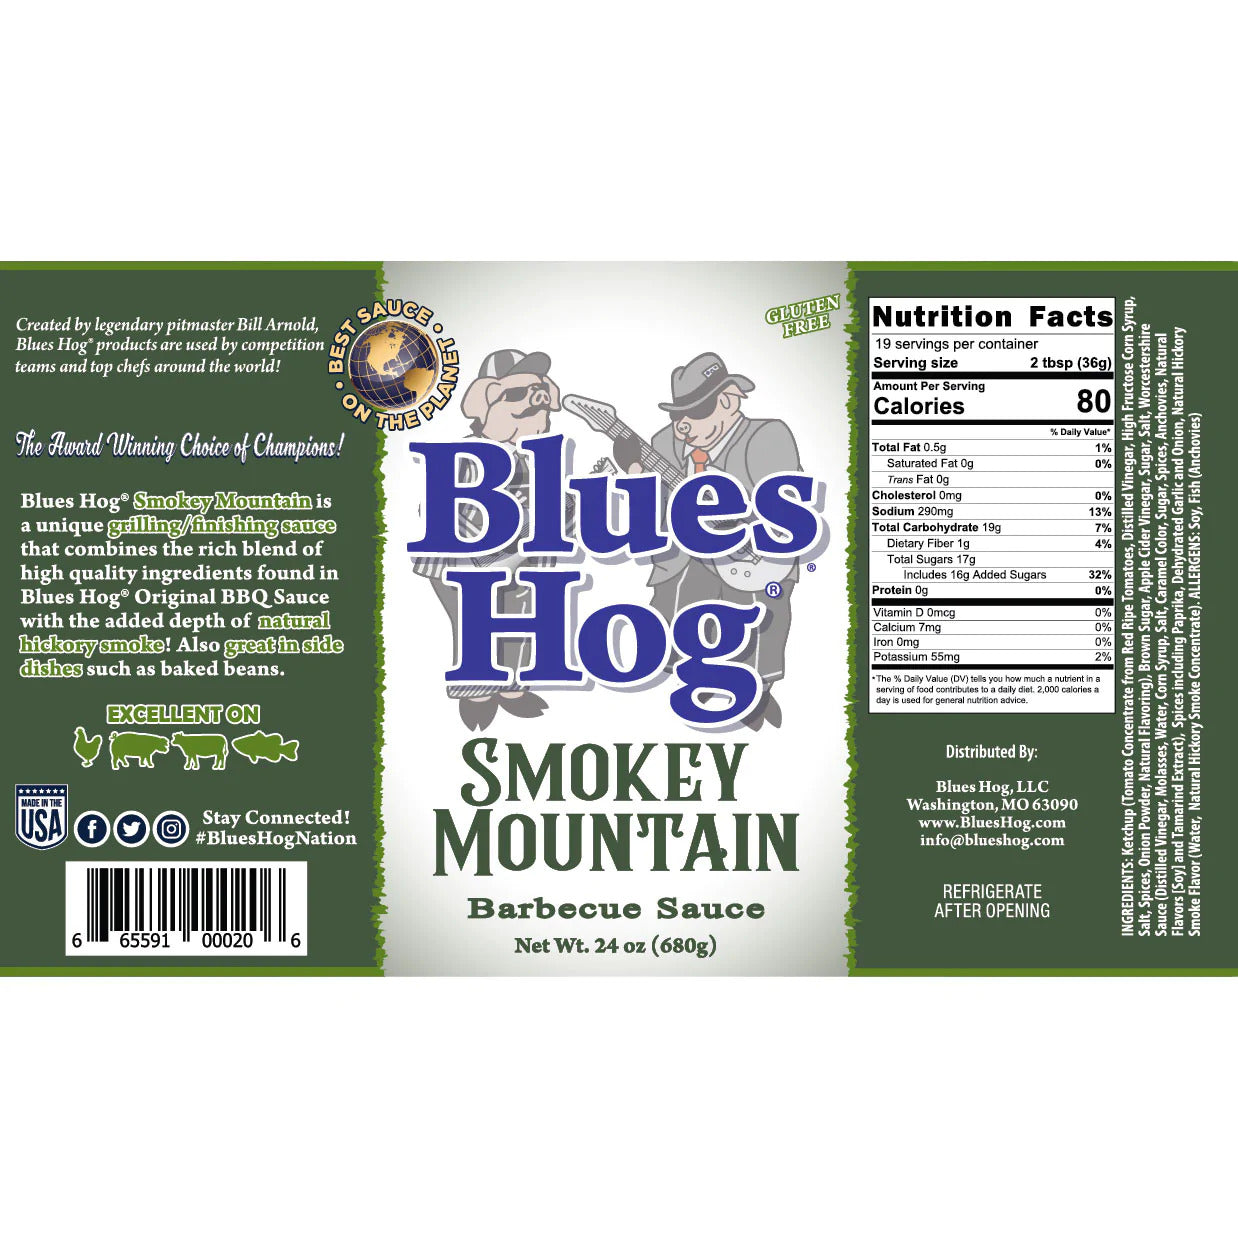 Blues Hog Smokey Mountain BBQ Sauce (24oz) Squeeze Bottle